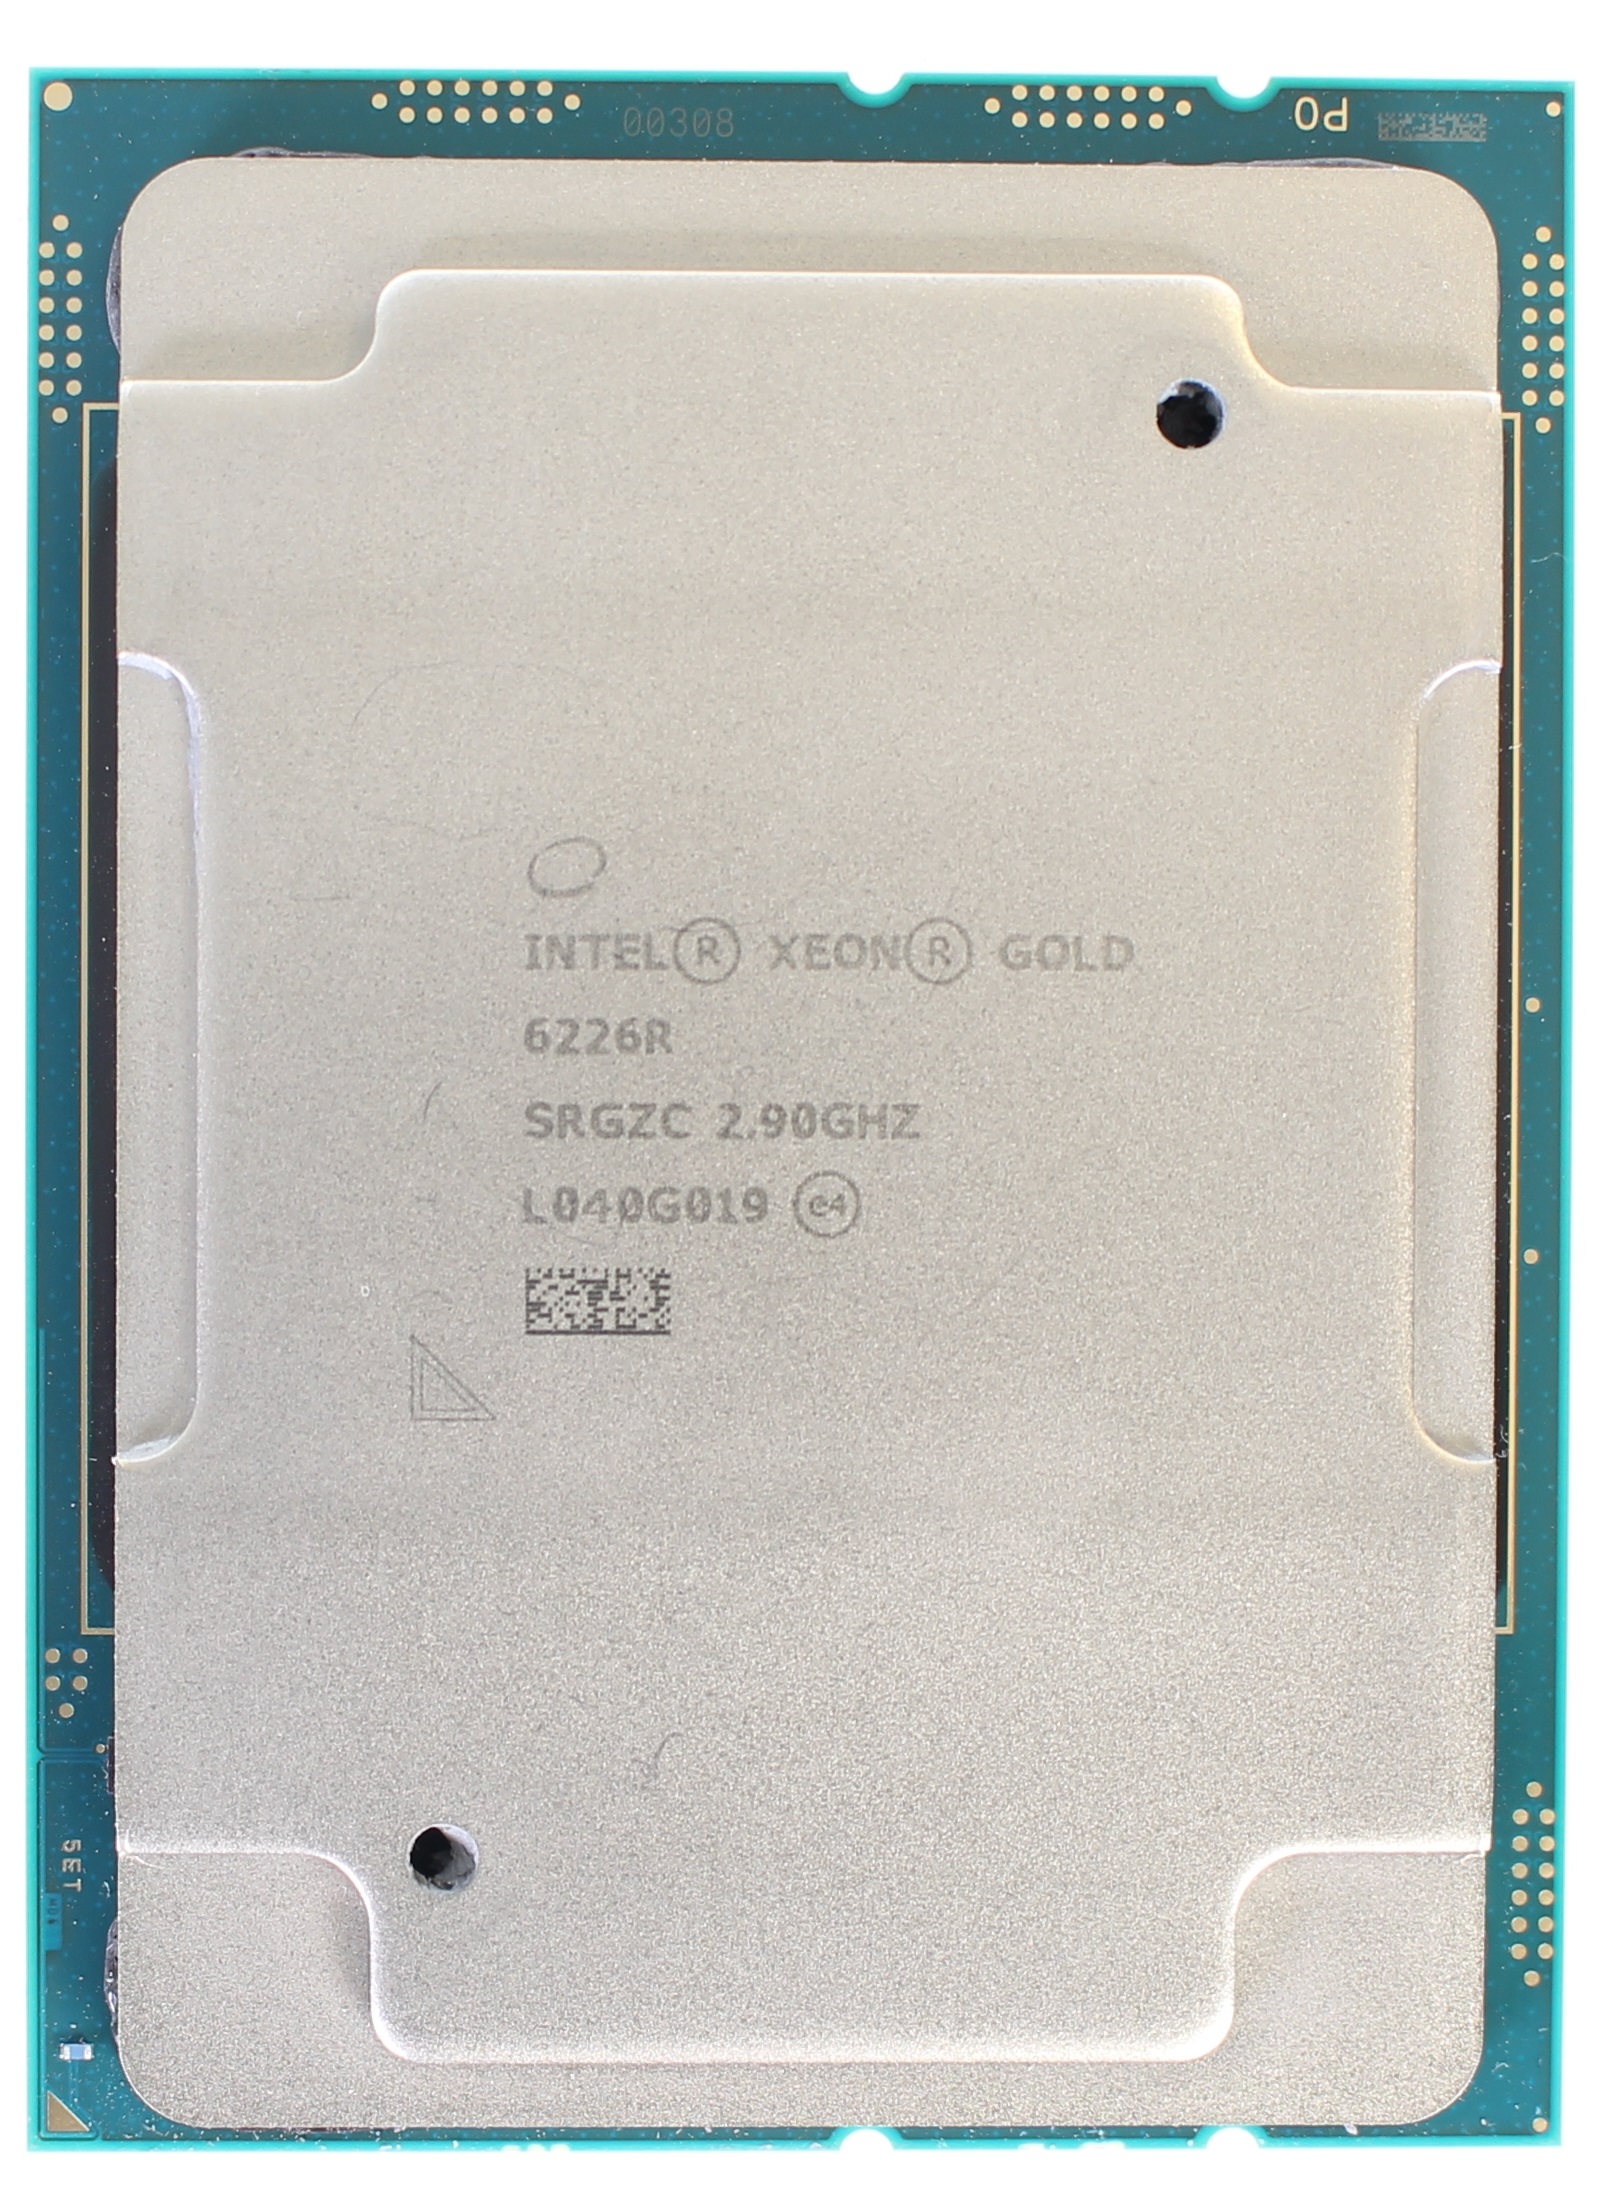 Intel Xeon Gold 6226R.